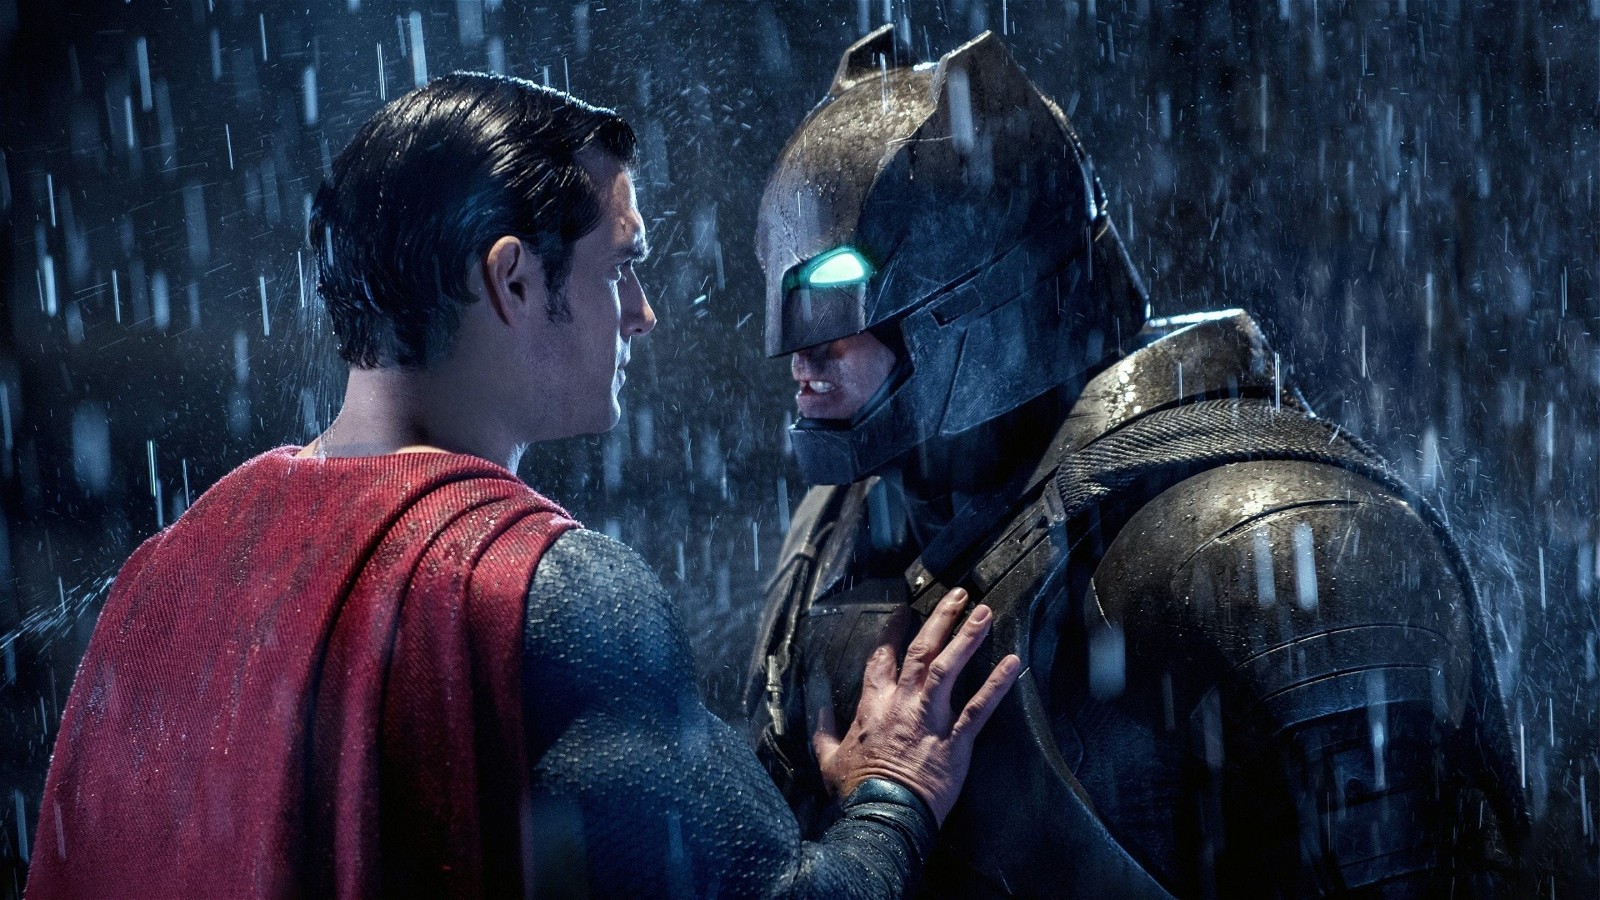 Henry Cavill as Superman and Ben Affleck as Batman in Batman V Superman: Dawn of Justice (2016).